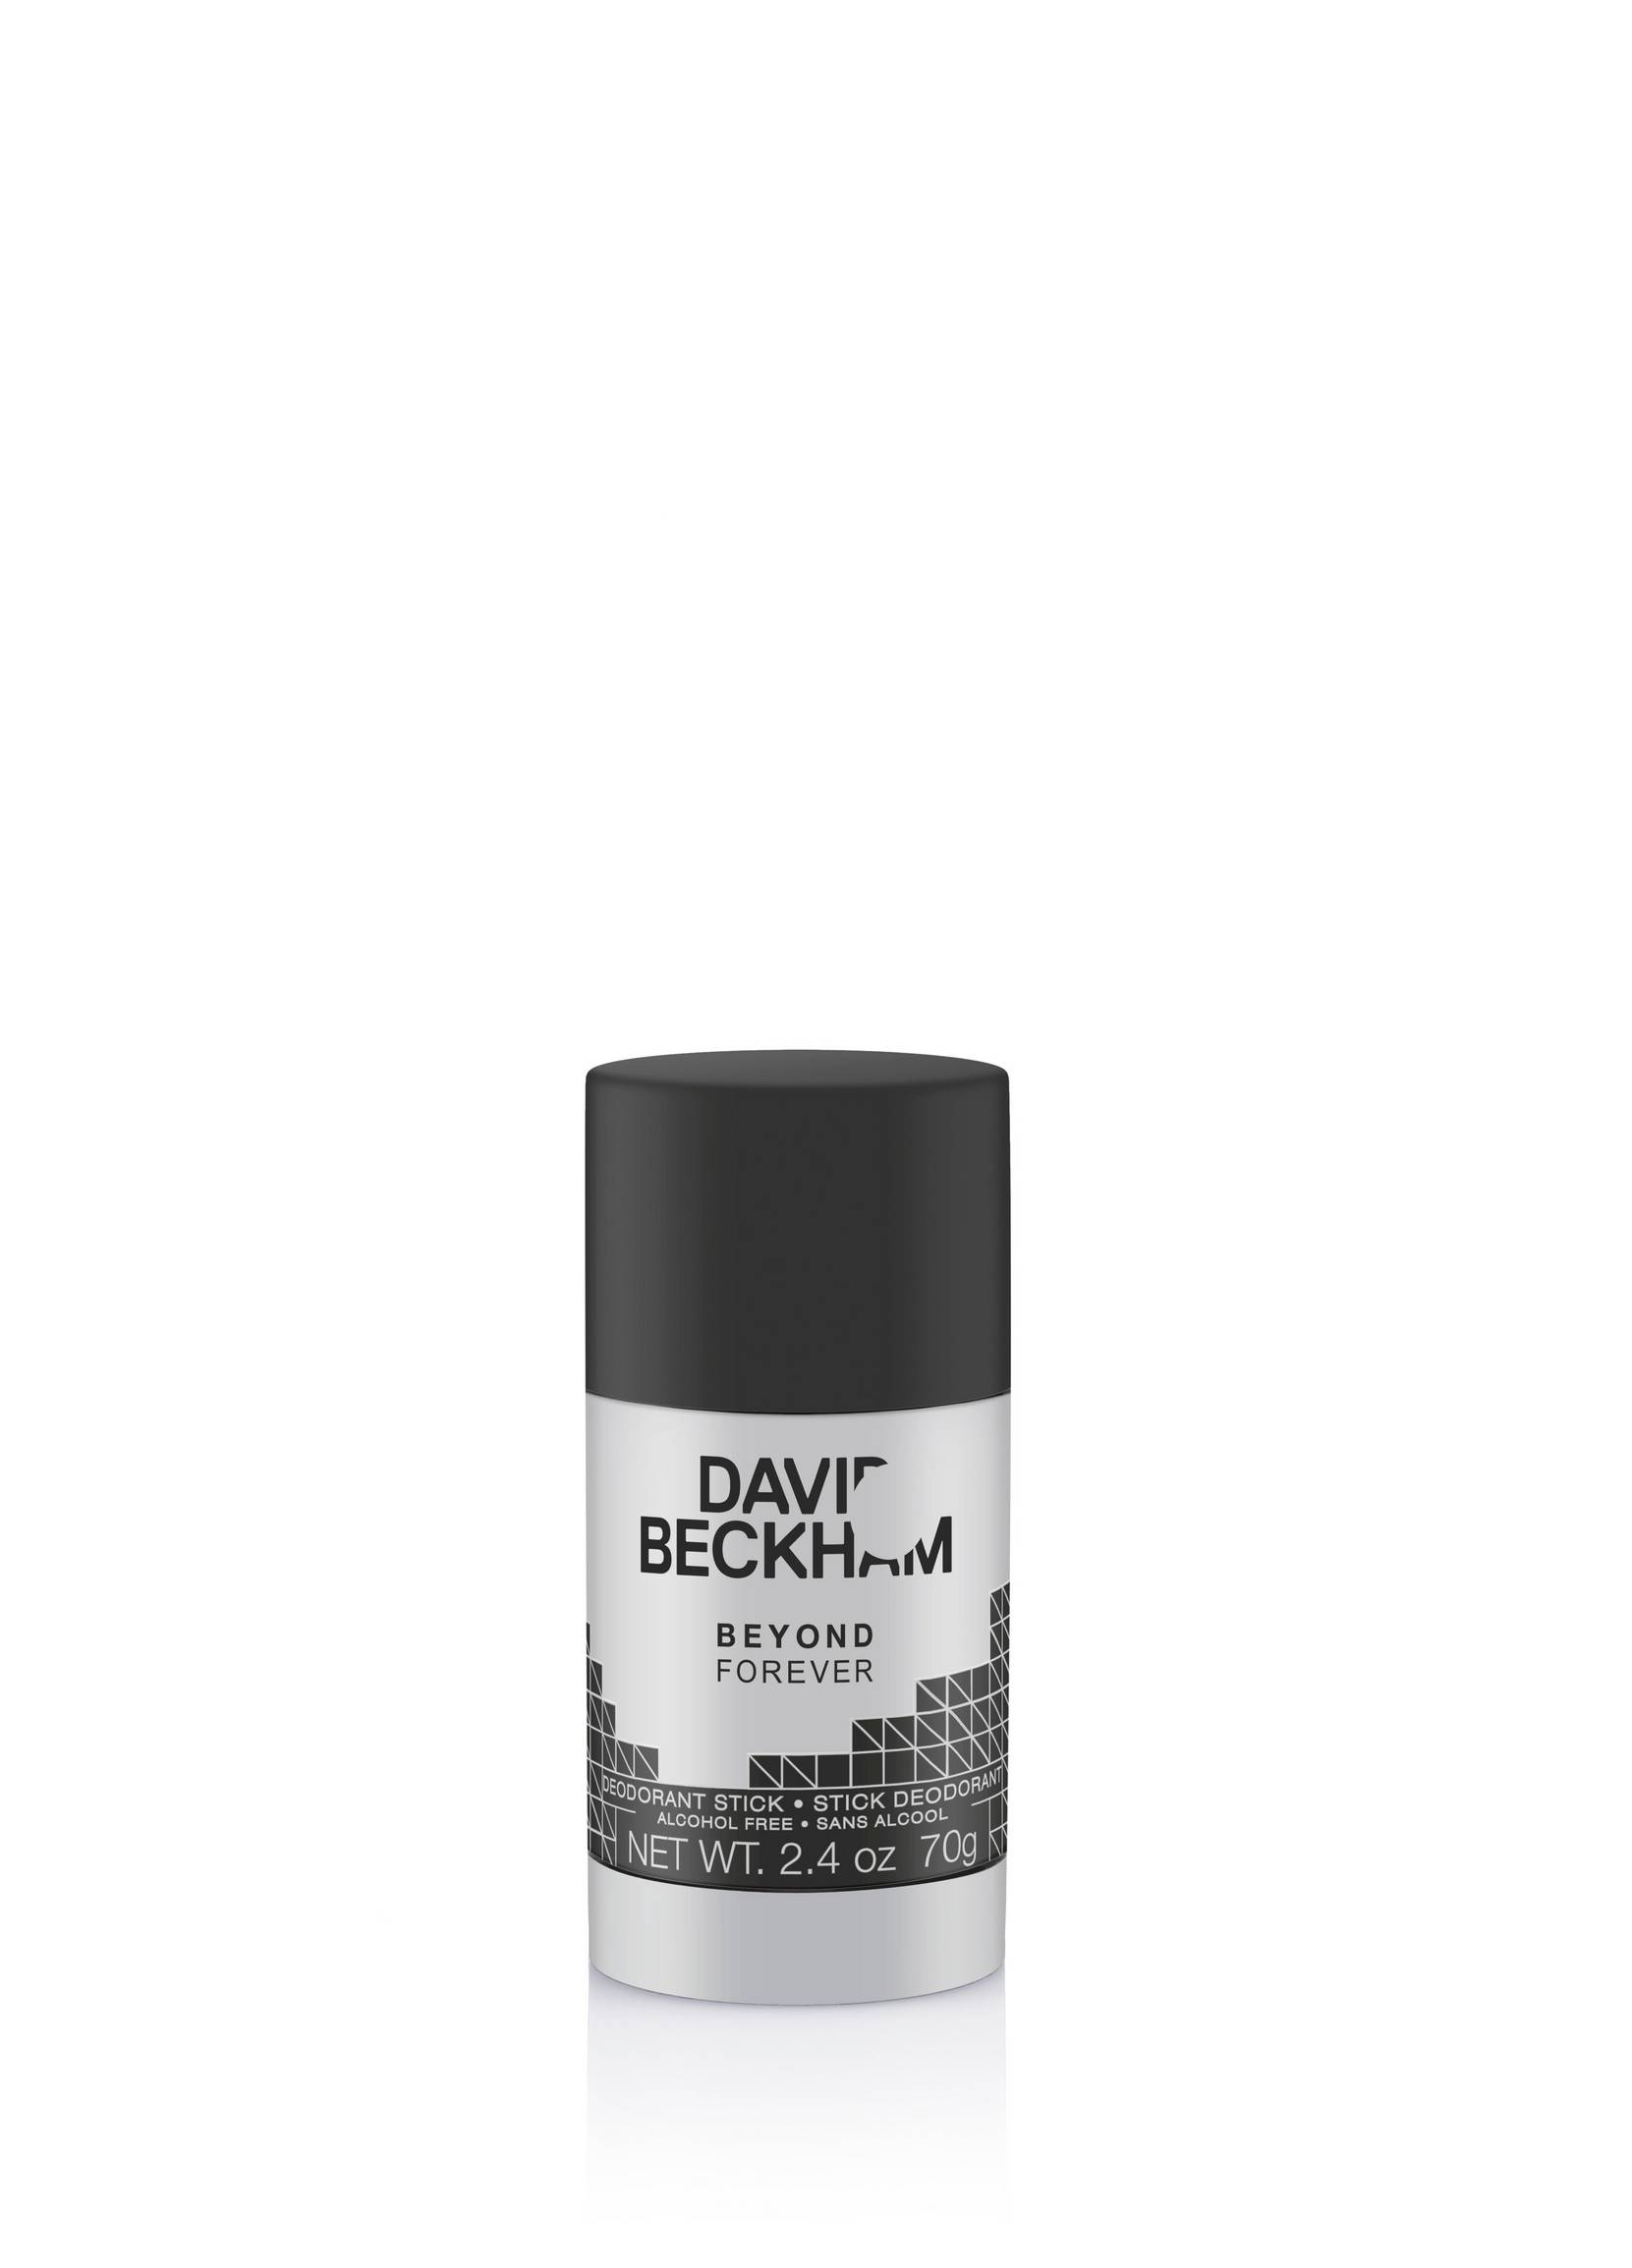 Beyond Forever Deodorant Stick, David Beckham